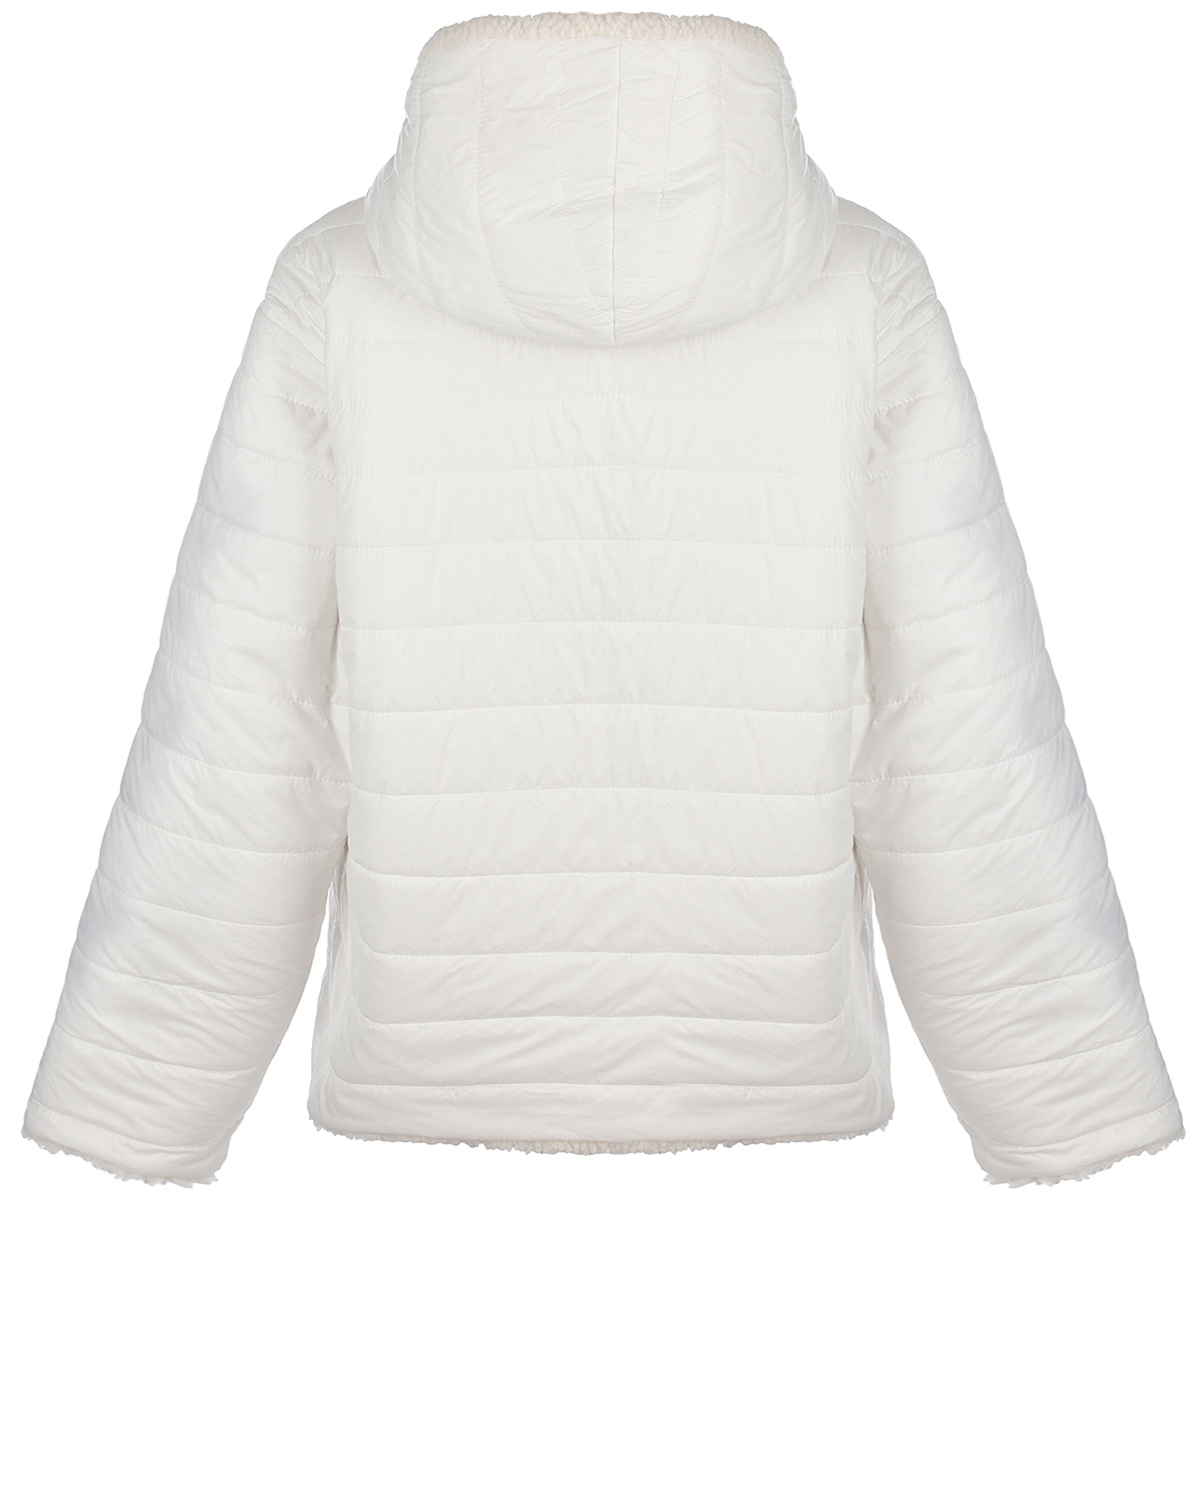 Двухсторонняя белая куртка Freedomday, размер 42, цвет белый - фото 4